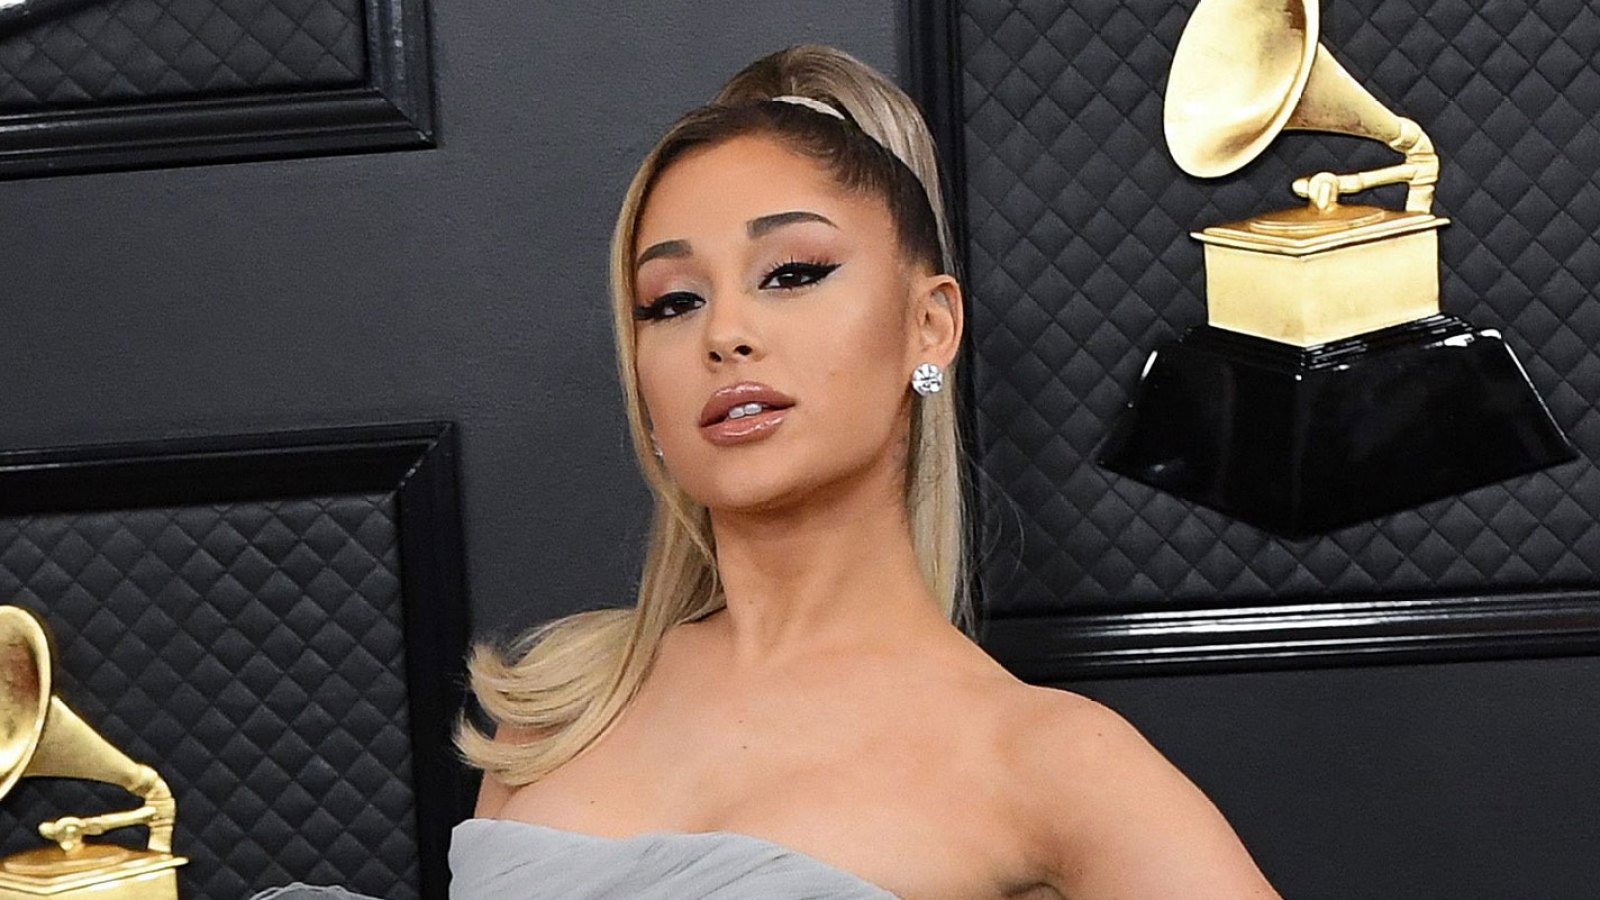 Grammys 2022: Ariana Grande Skips Awards Show Amid 3 Nominations